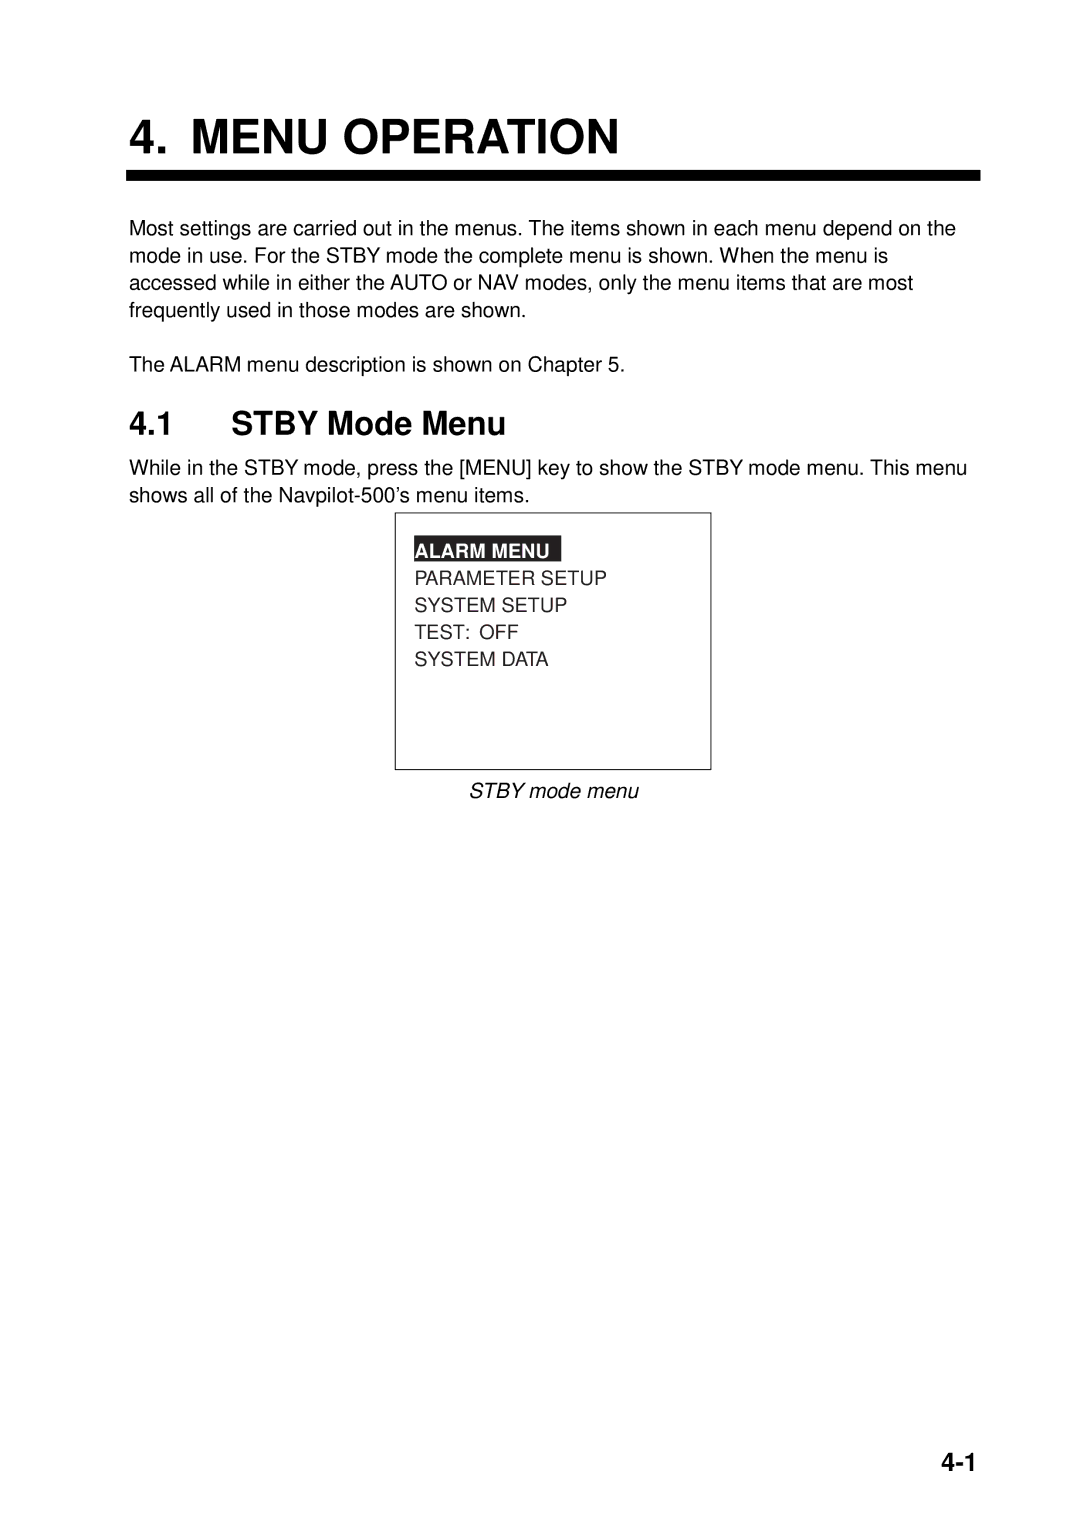 Furuno 500 manual Menu Operation, Stby Mode Menu, Stby mode menu 